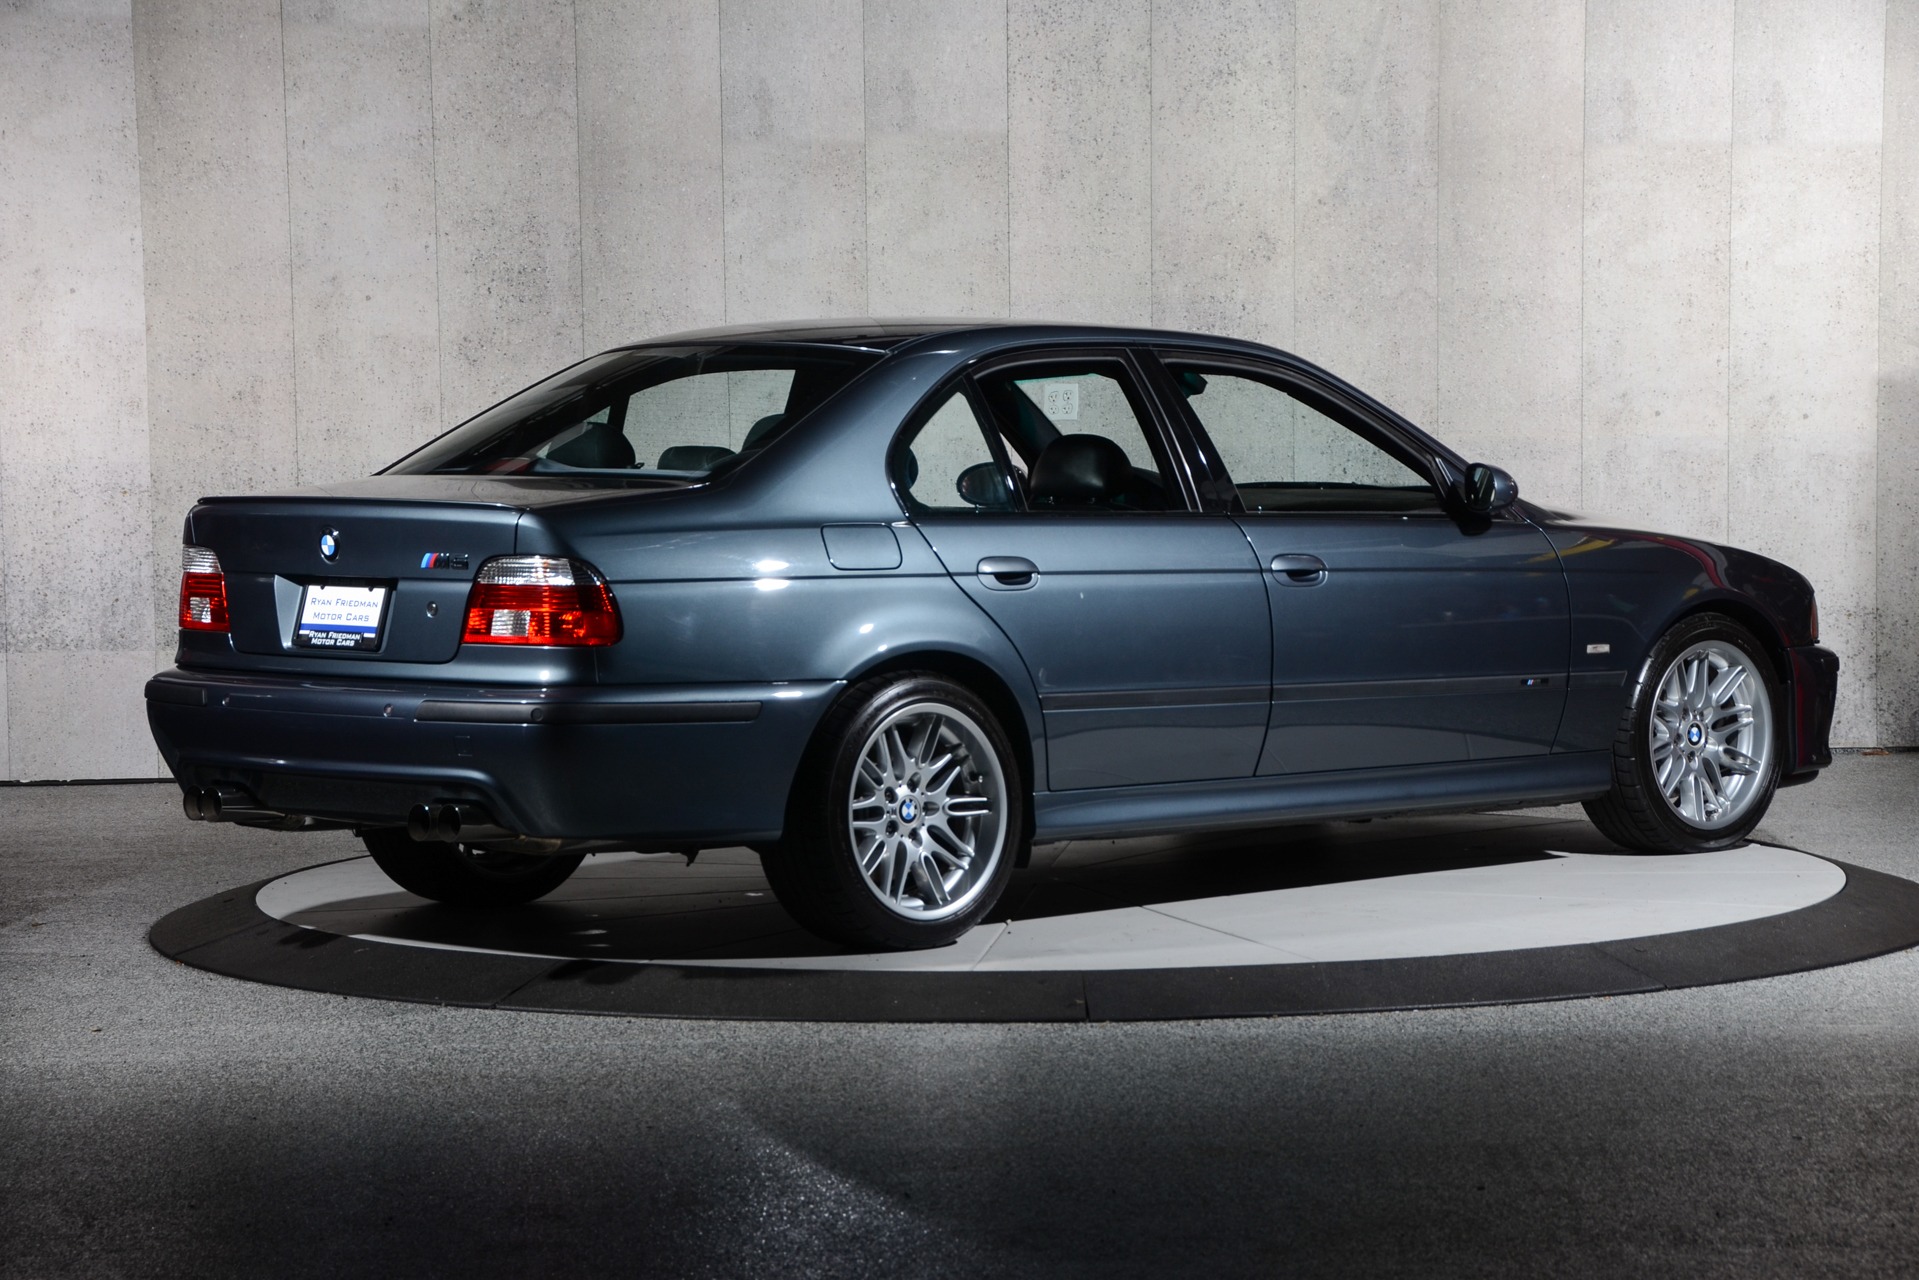 Used 2008 BMW M5 For Sale (Sold)  Ryan Friedman Motor Cars LLC Stock #578